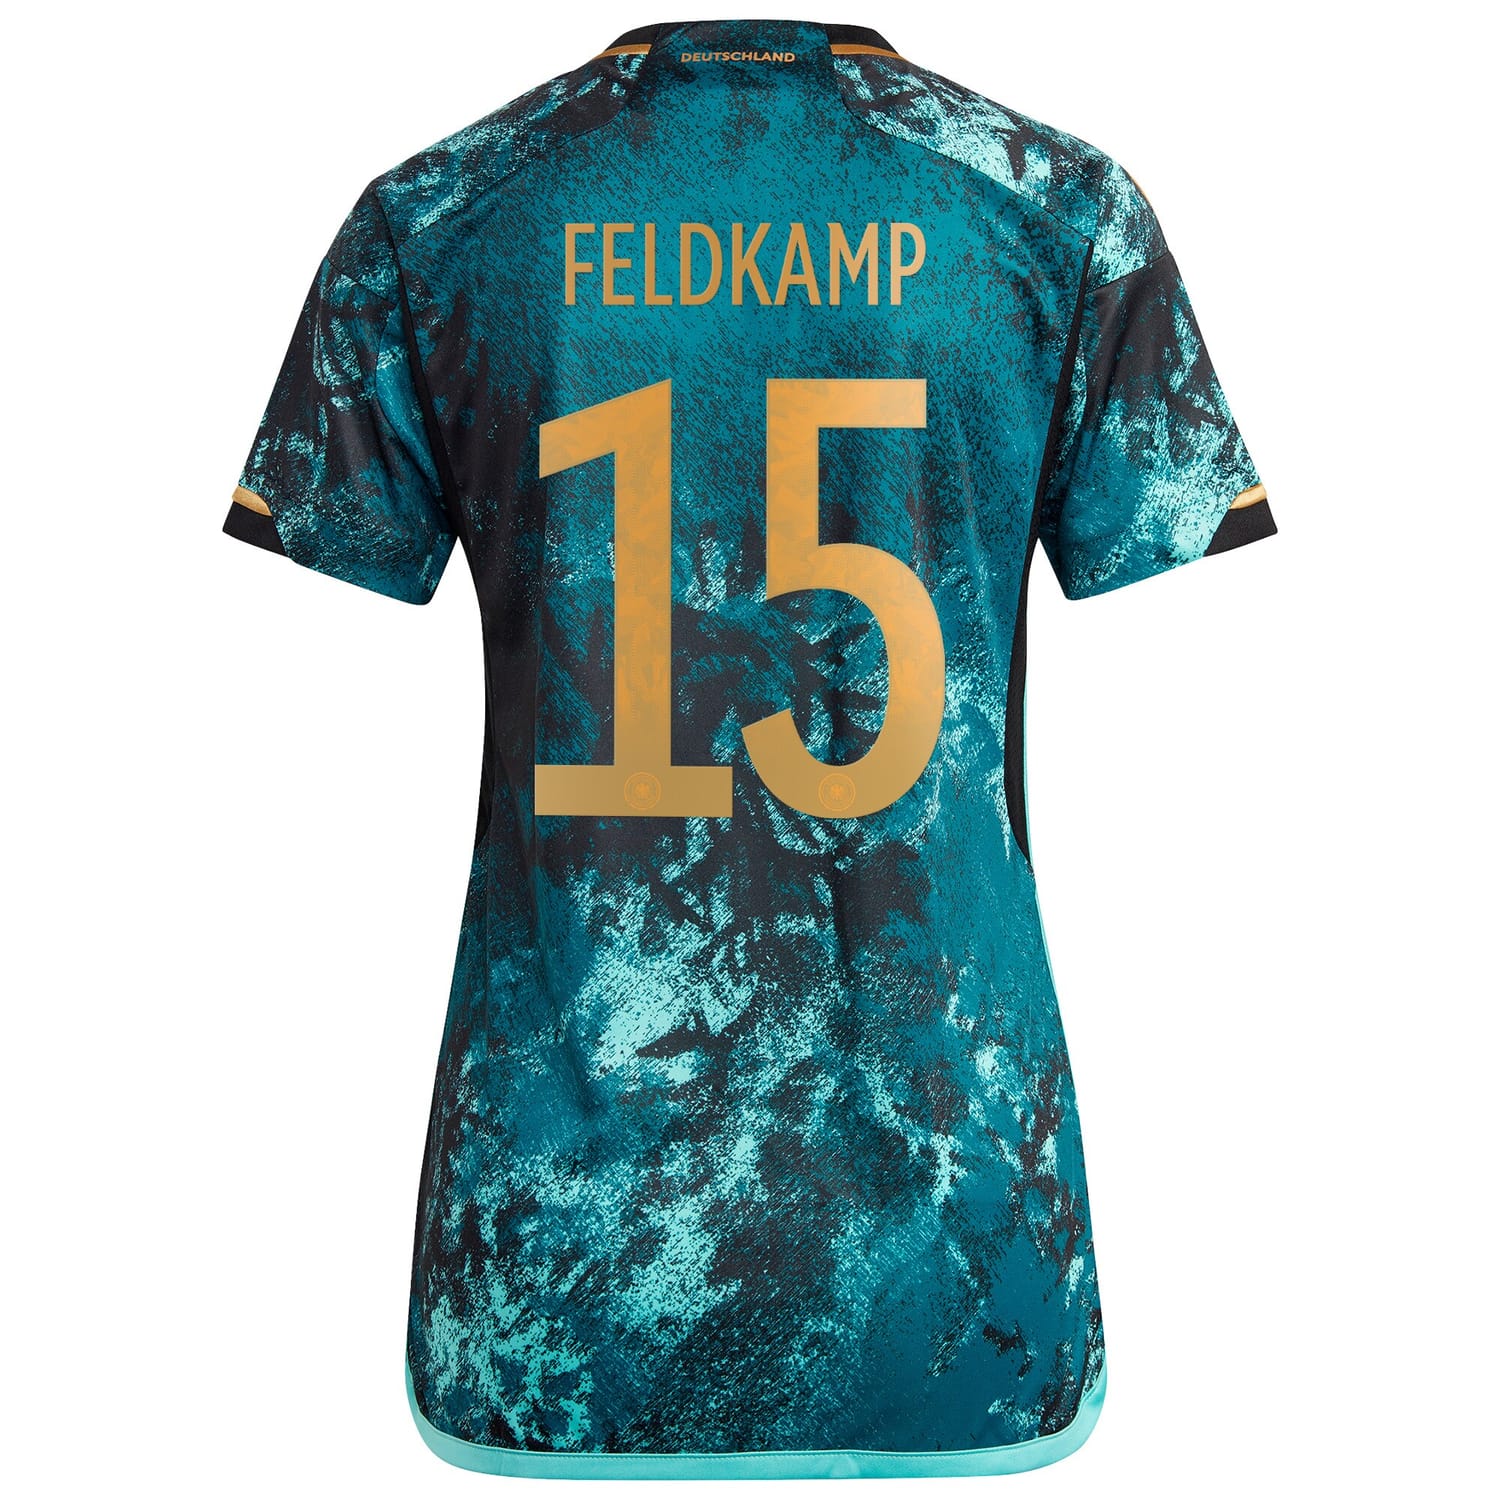 Germany National Team Away Jersey Shirt 2023 player Feldkamp 15 printing for Women